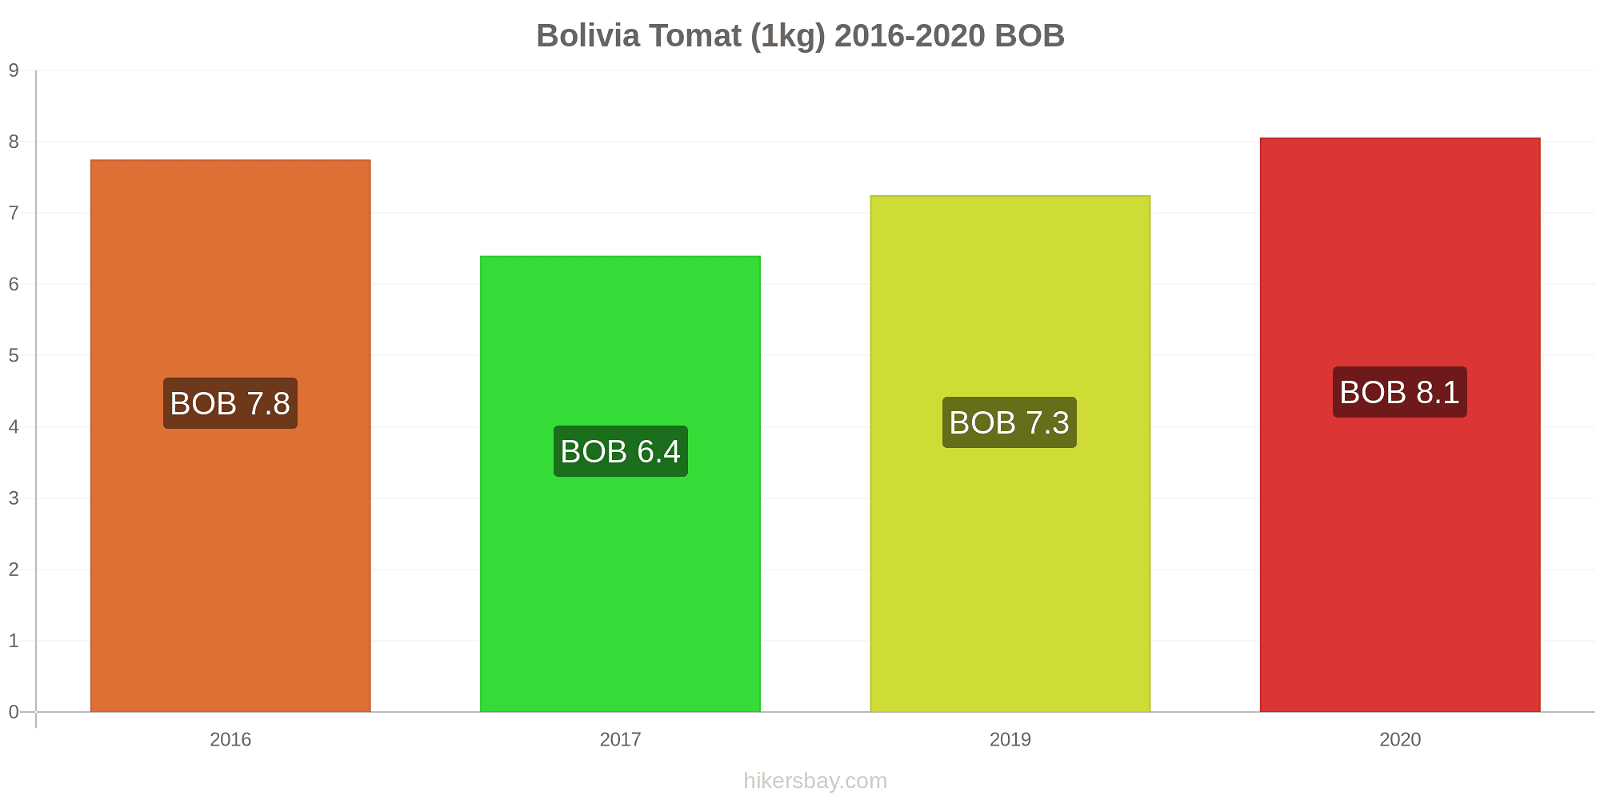 Bolivia perubahan harga Tomat (1kg) hikersbay.com